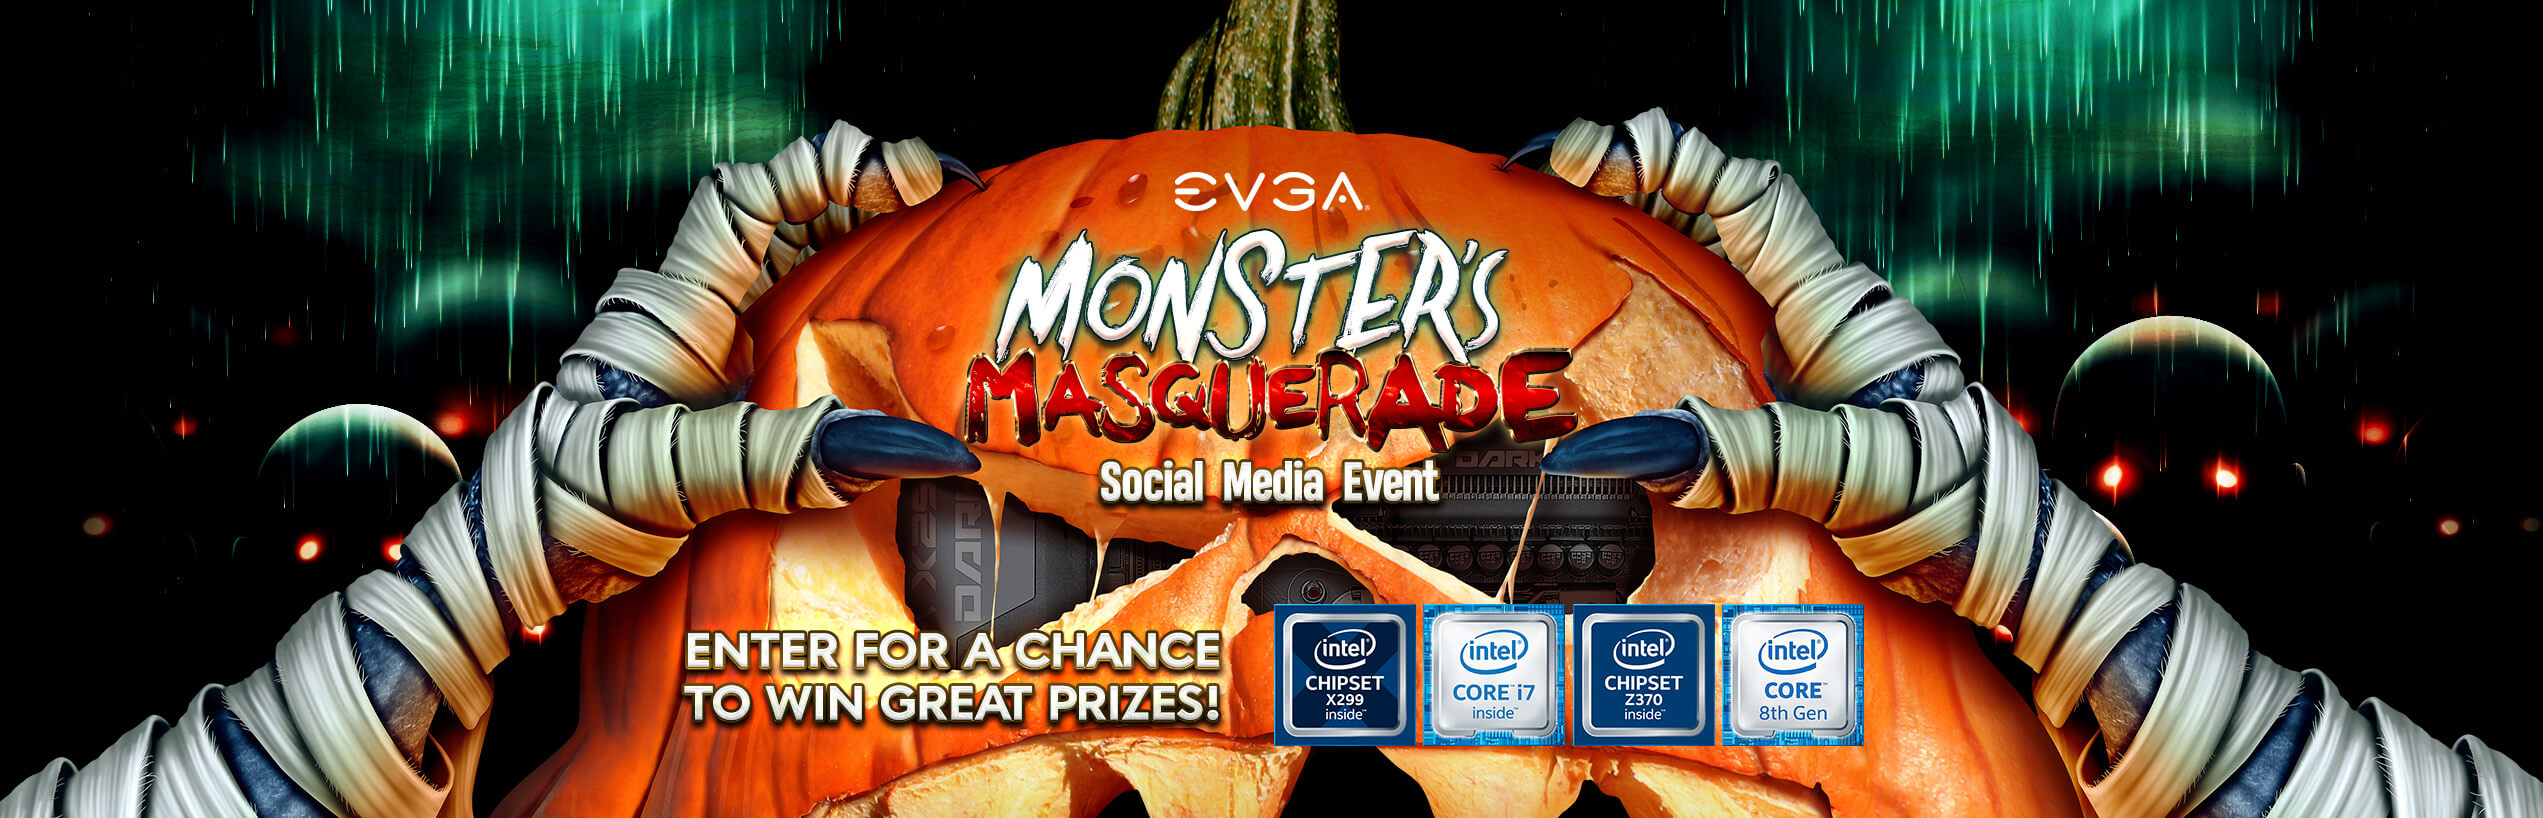 Monster's Masquerade Social Media Event